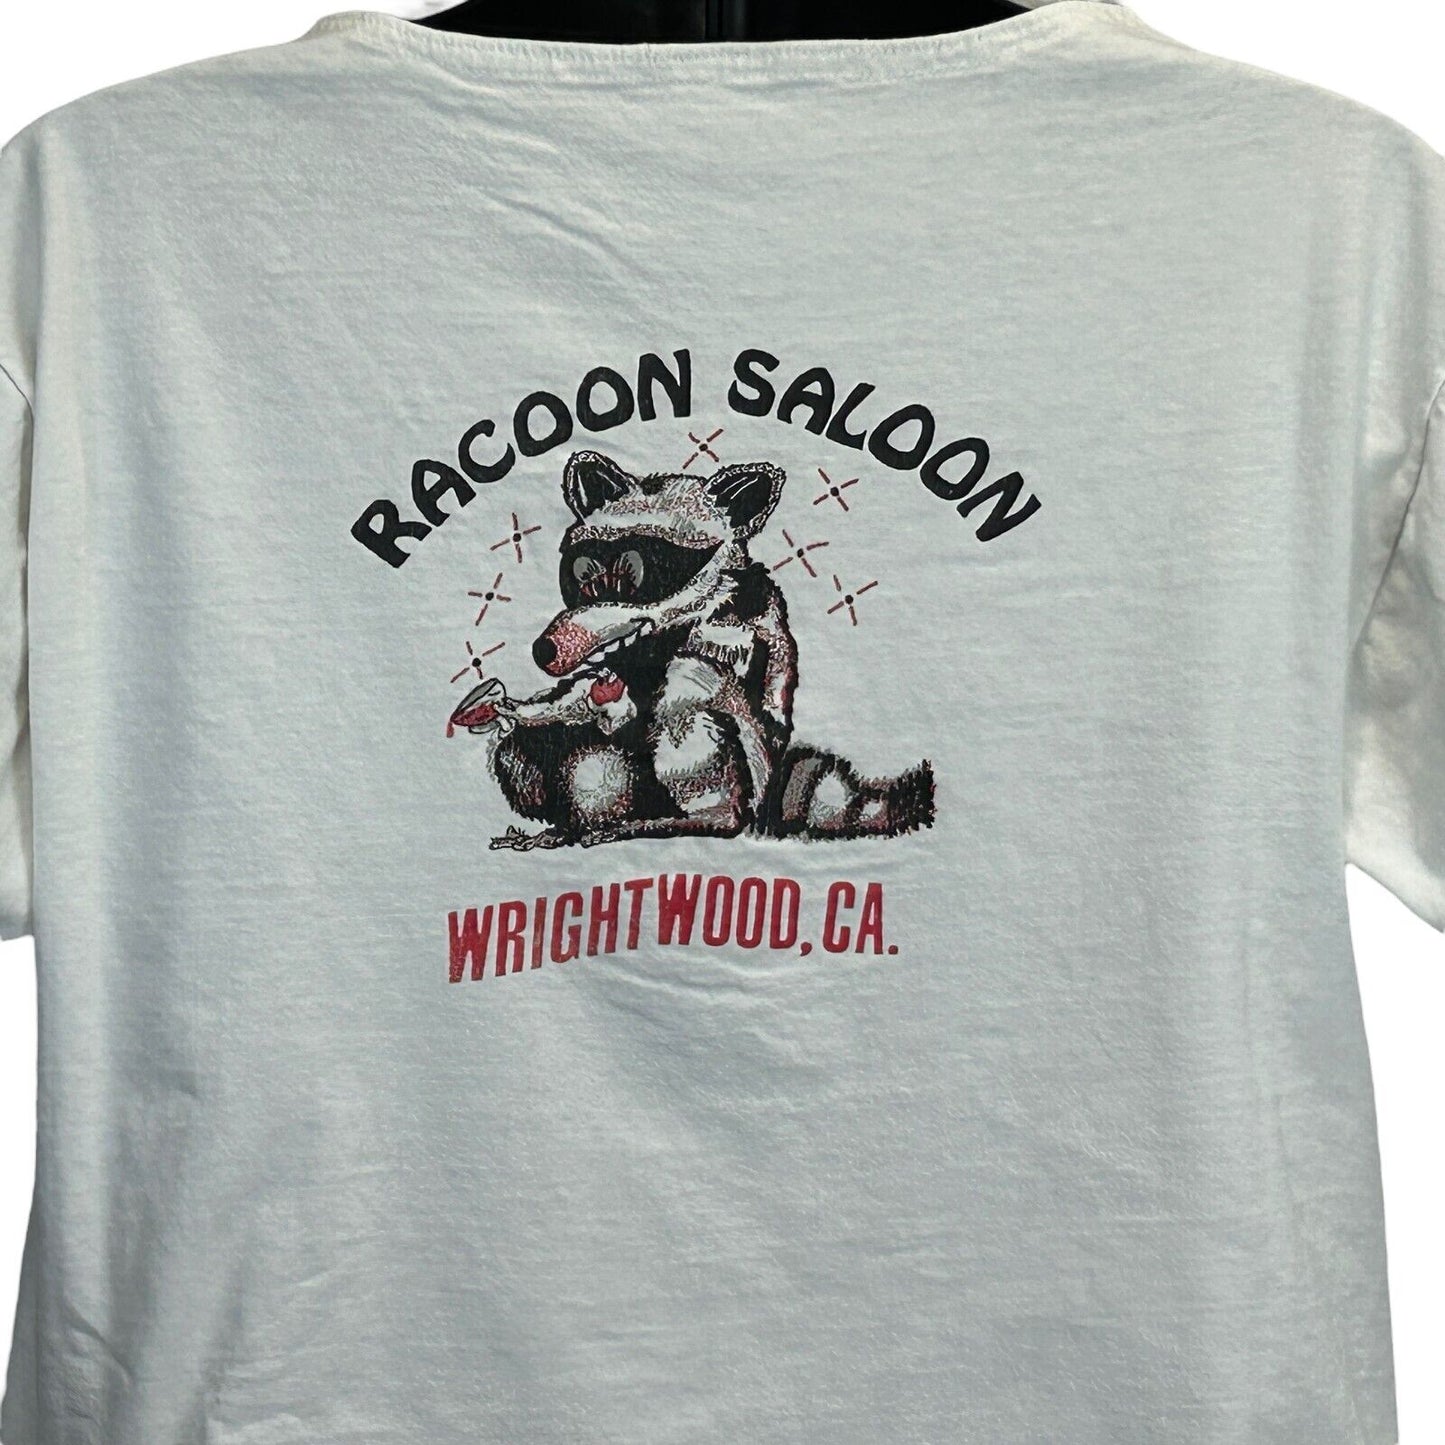 Racoon Saloon Wrightwood California Vintage 90s T Shirt Bar Crop Top Tee Large